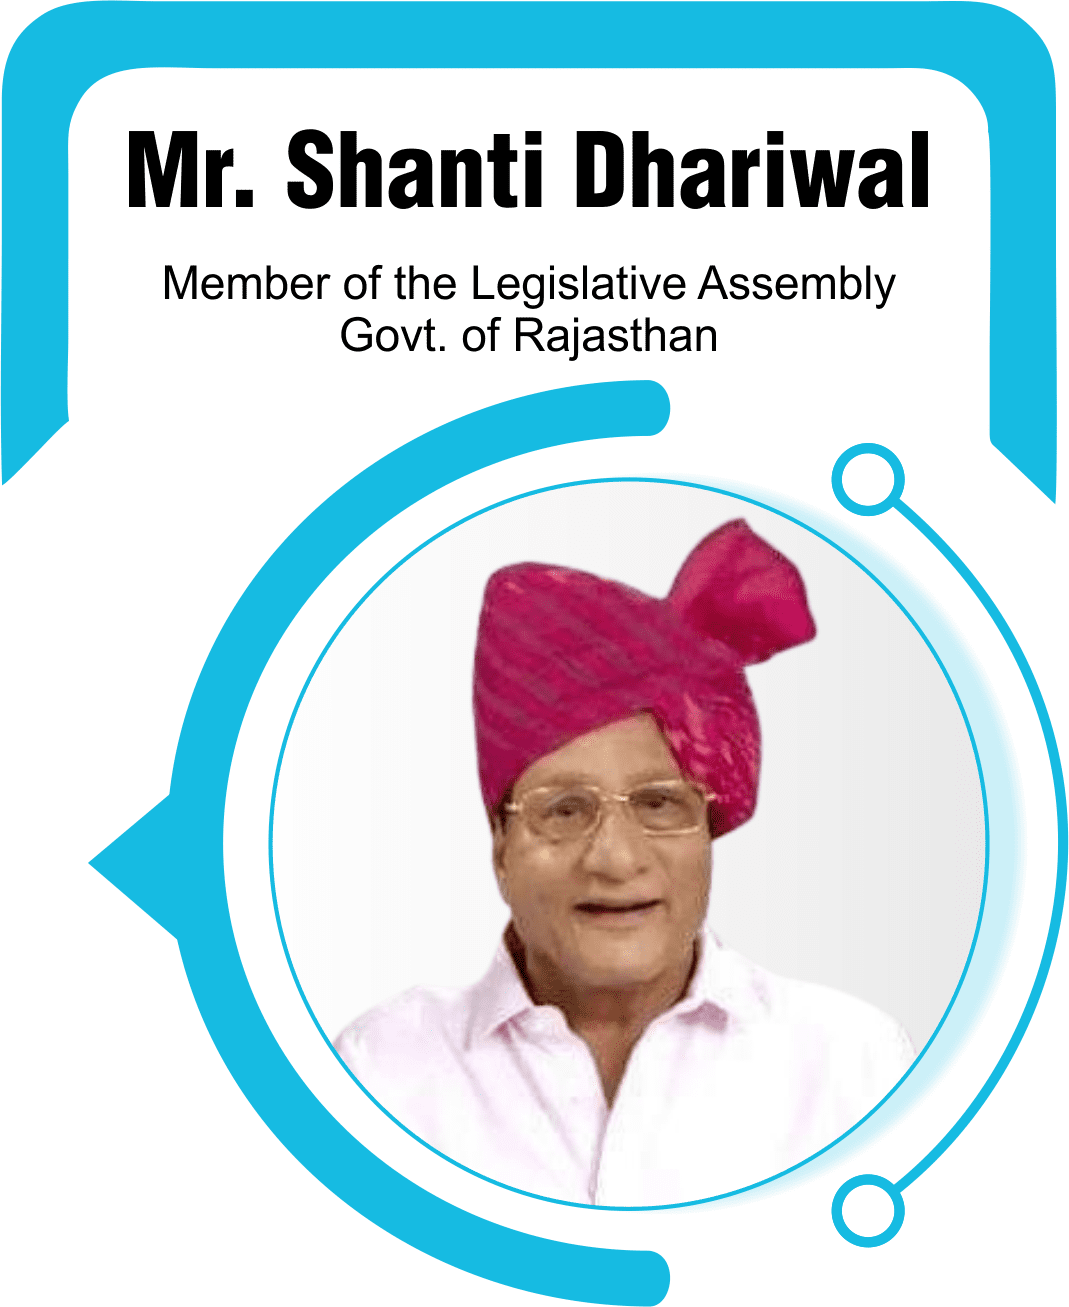 Shanti Dhariwal